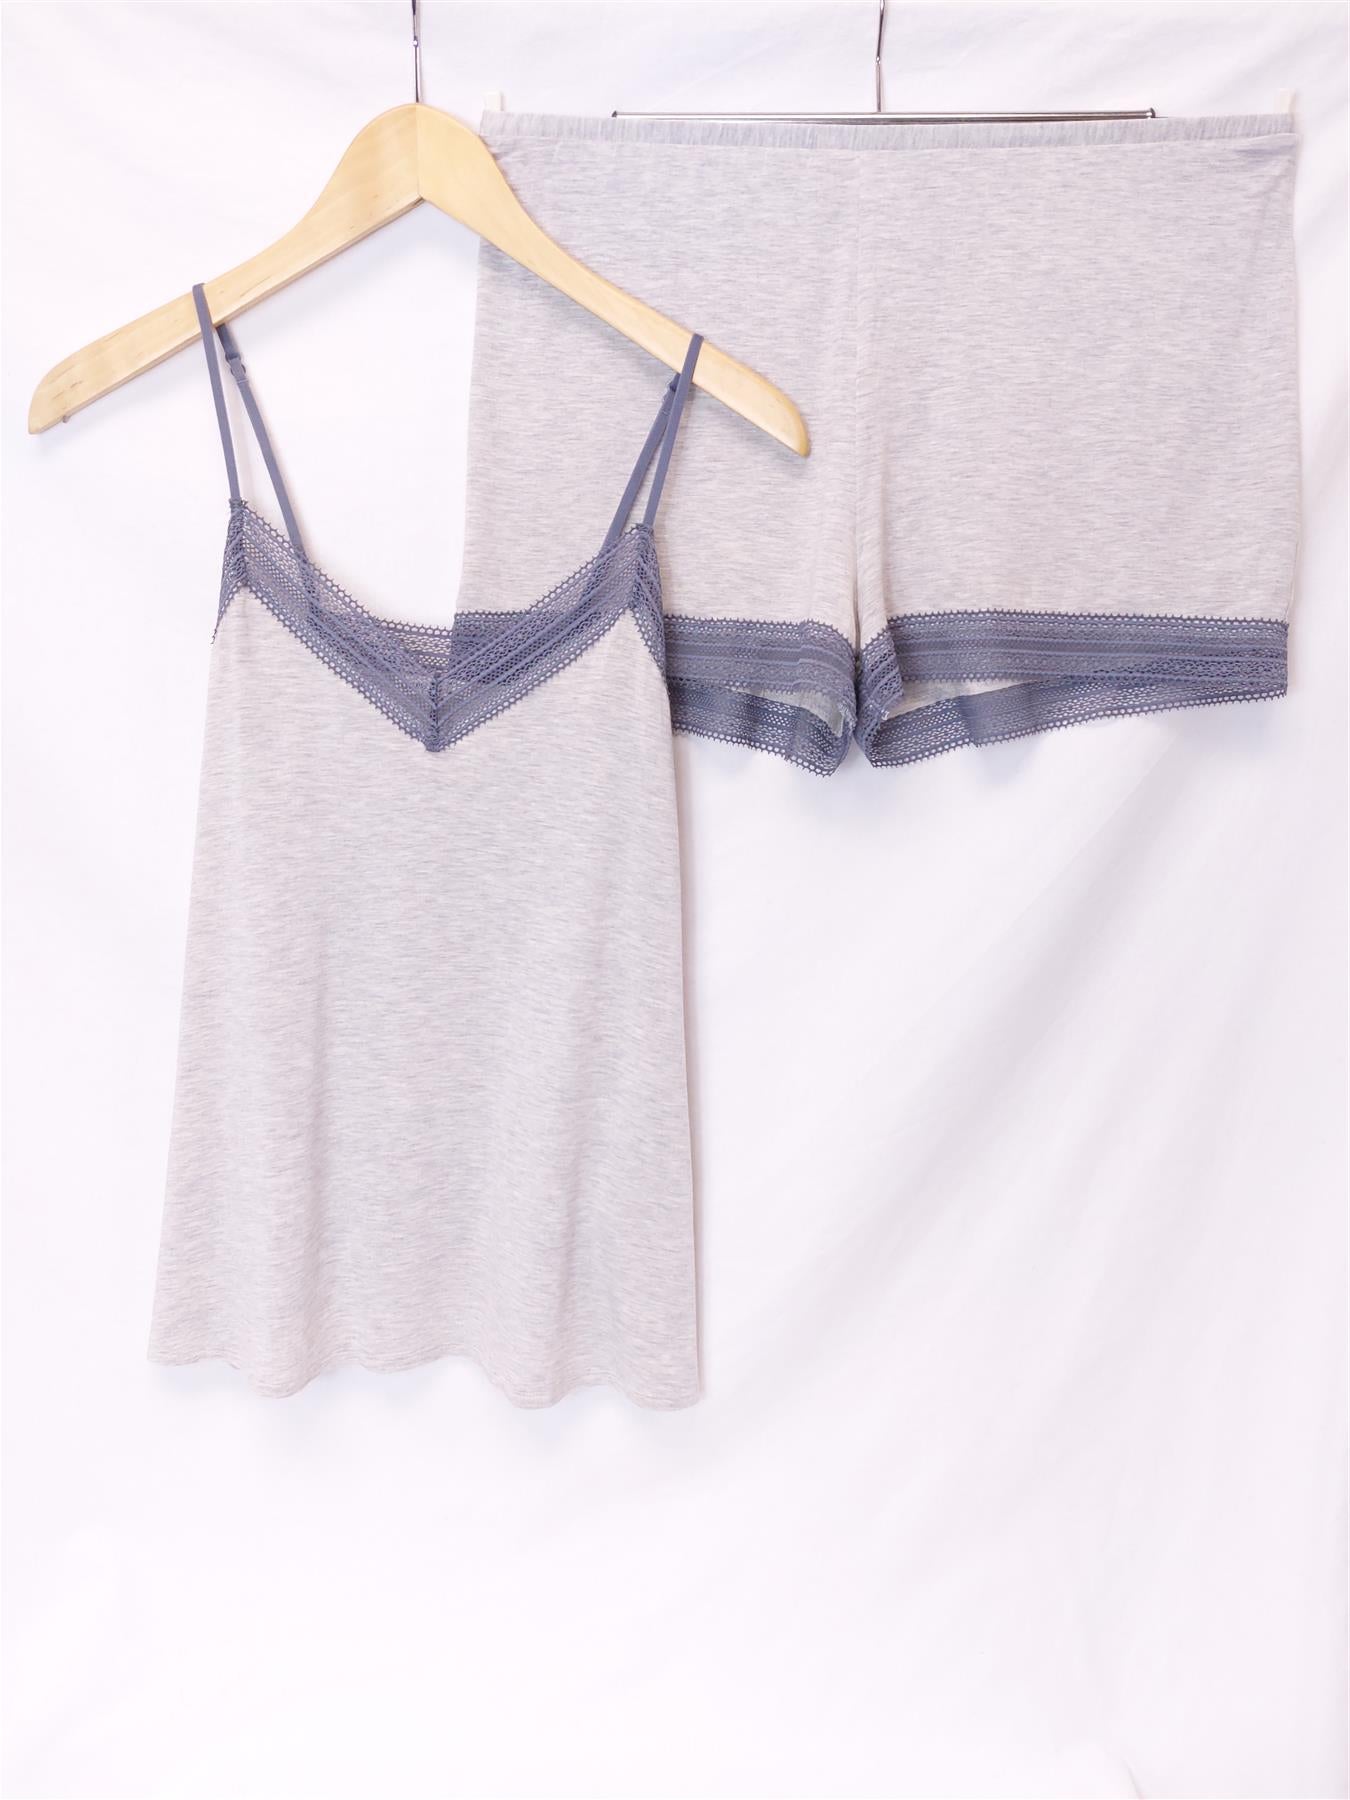 Women's Supersoft Pyjama Set Cami Top & Shorts Comfy Soft Stretch Lace Grey Blue